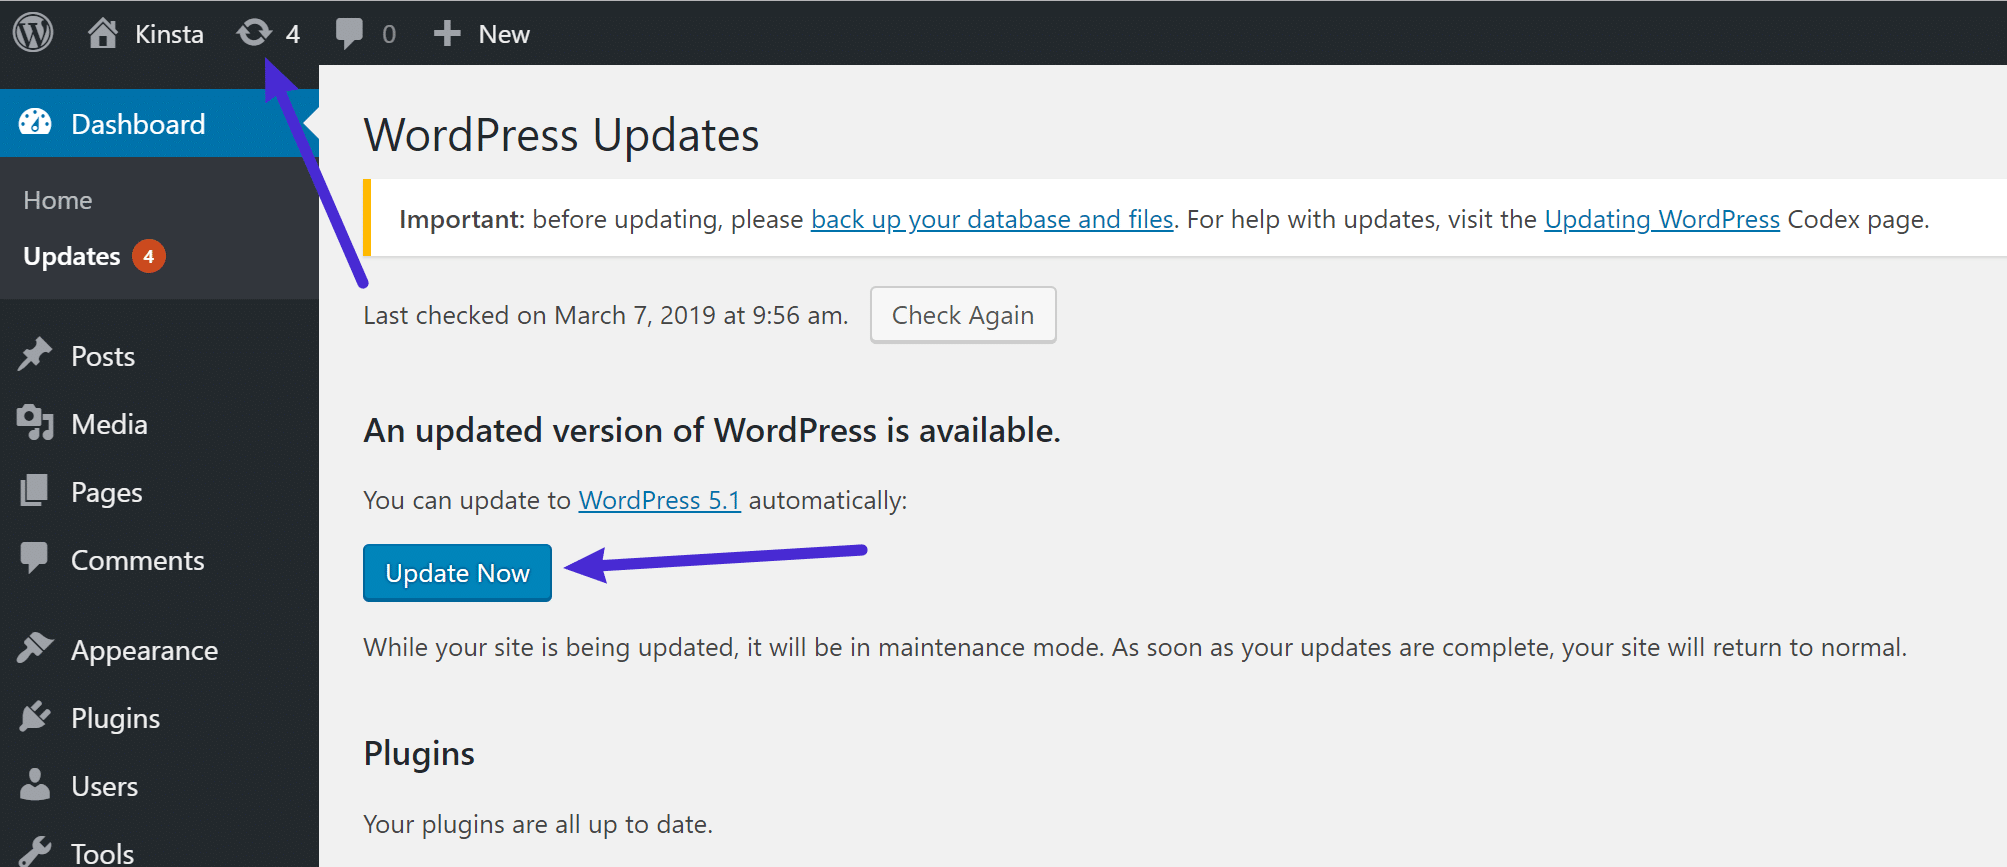 How to update to WordPress 5.1